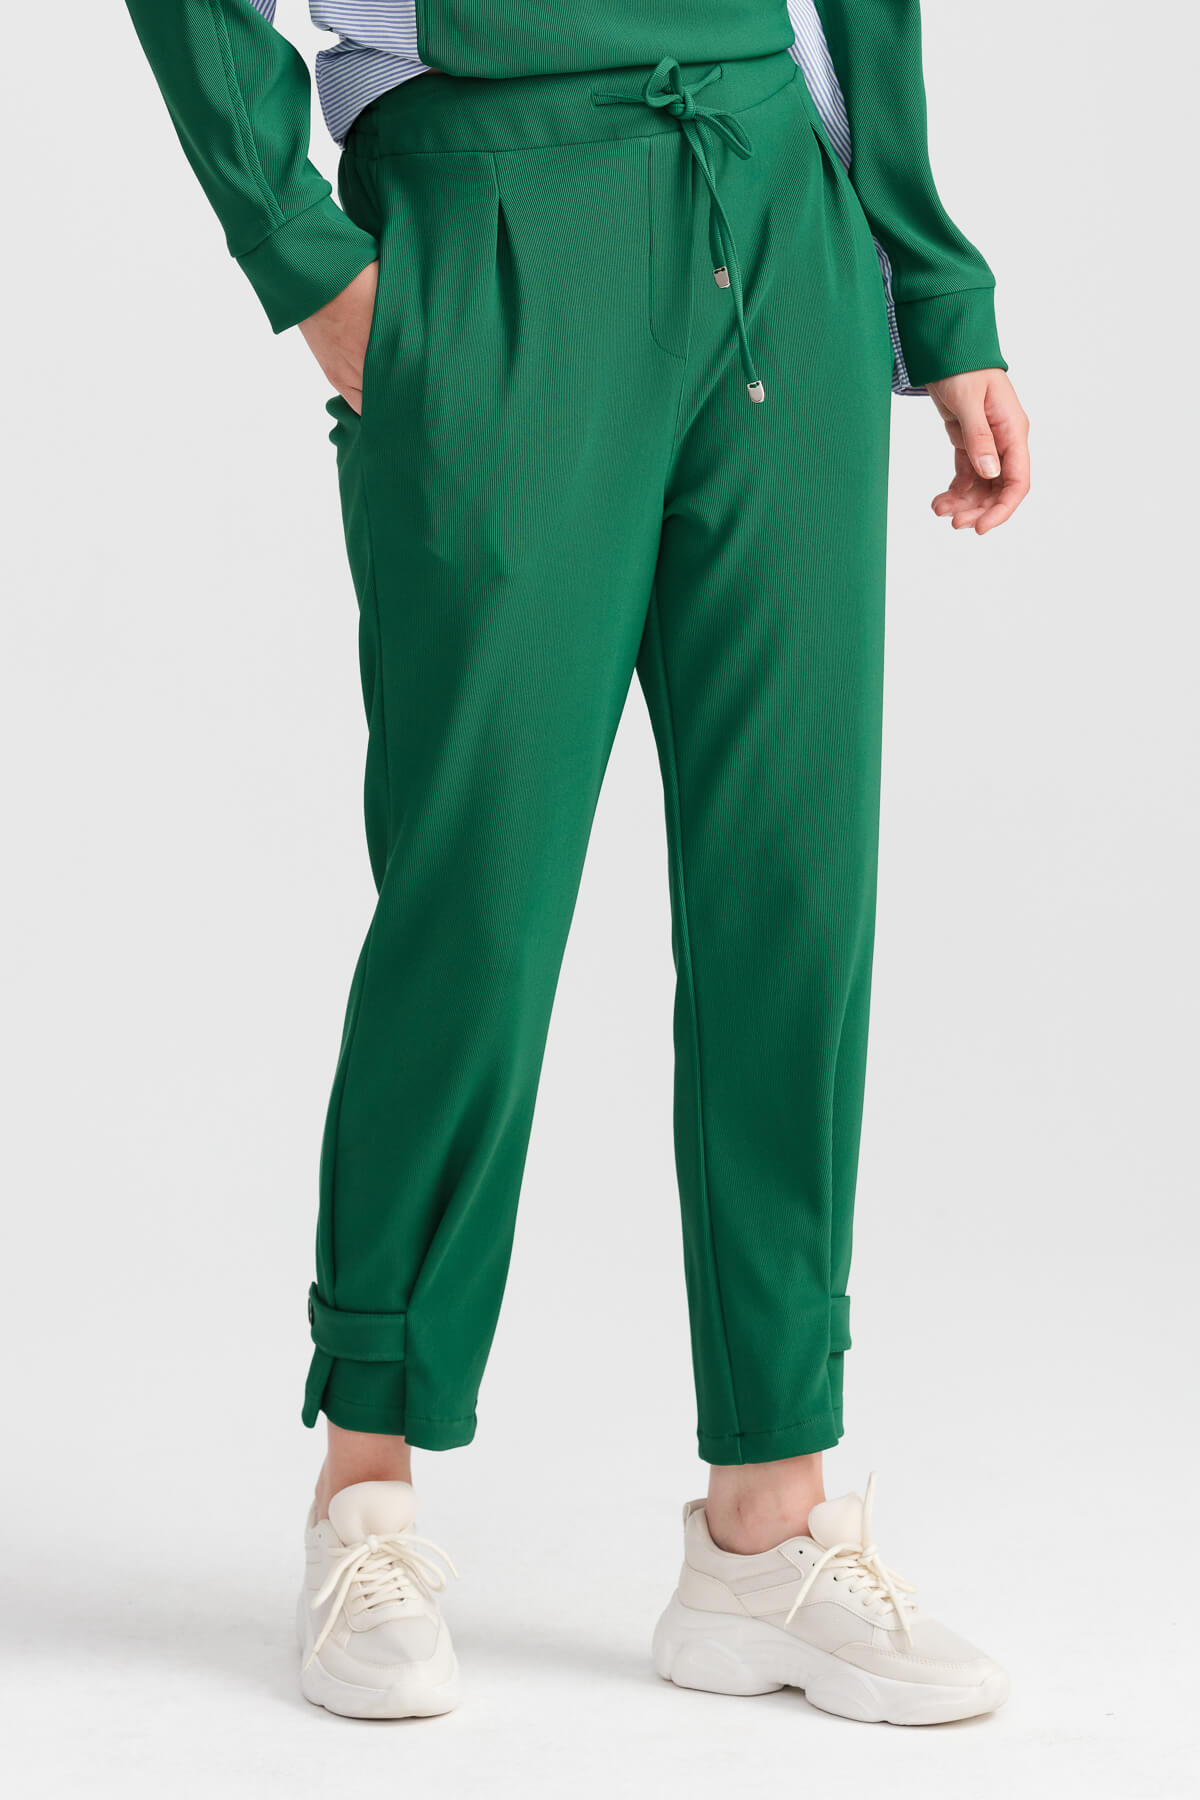 Nihan Paçası Pensli Beli Lastikli Pantolon Benetton Yeşili